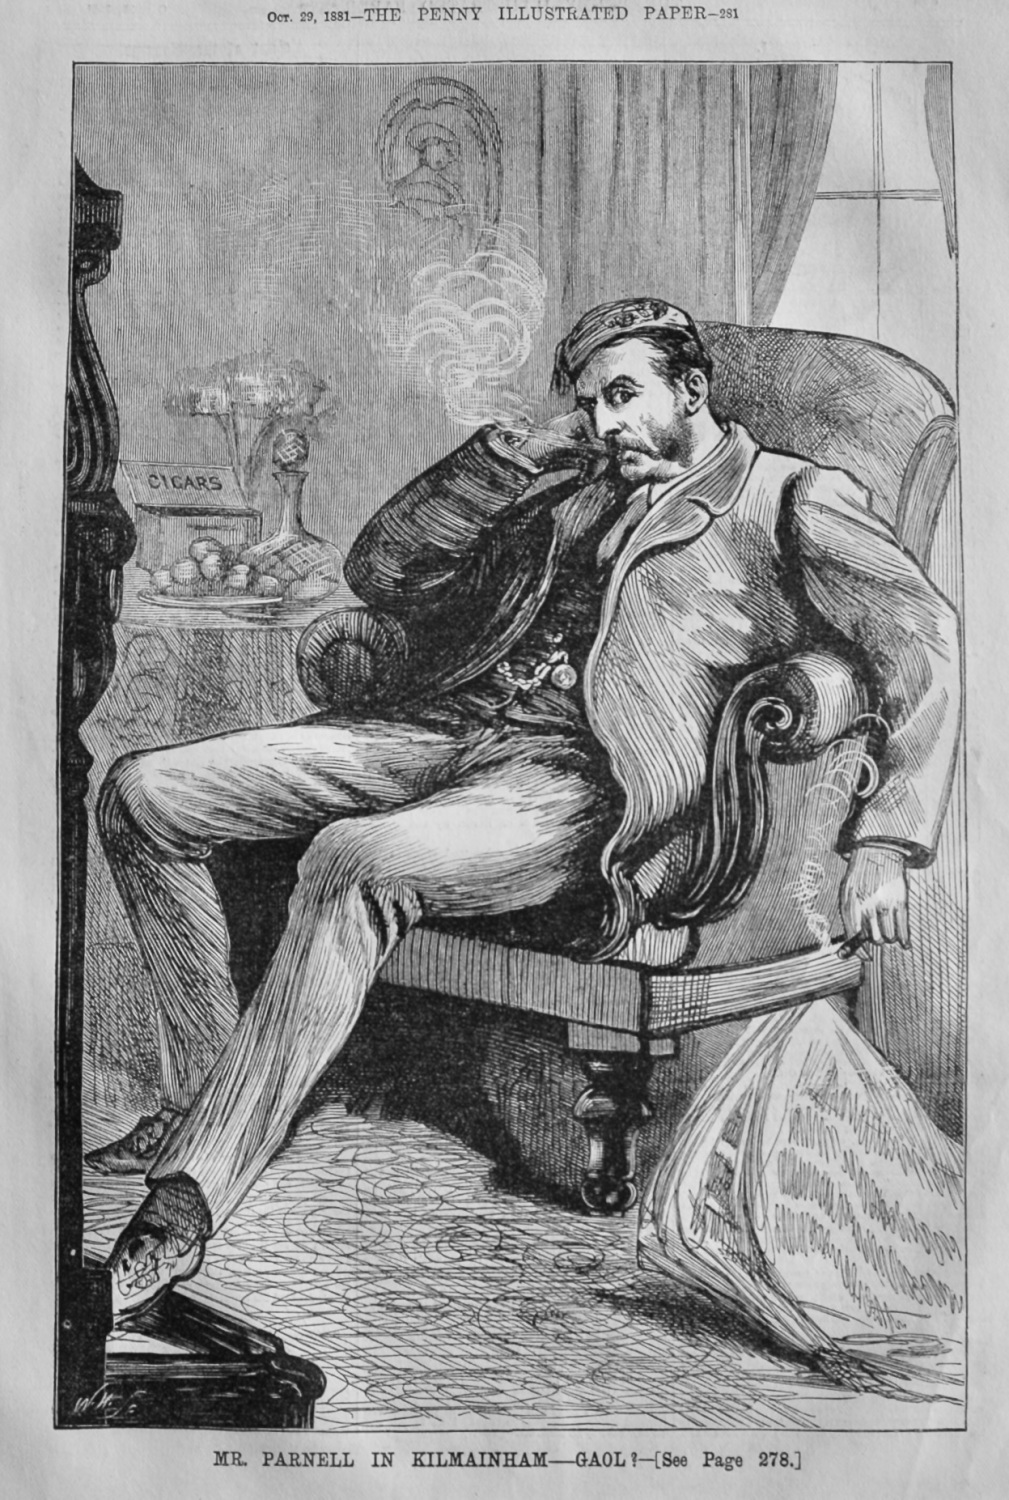 Mr. Parnell in Kilmainham-GAOL!.   1881.